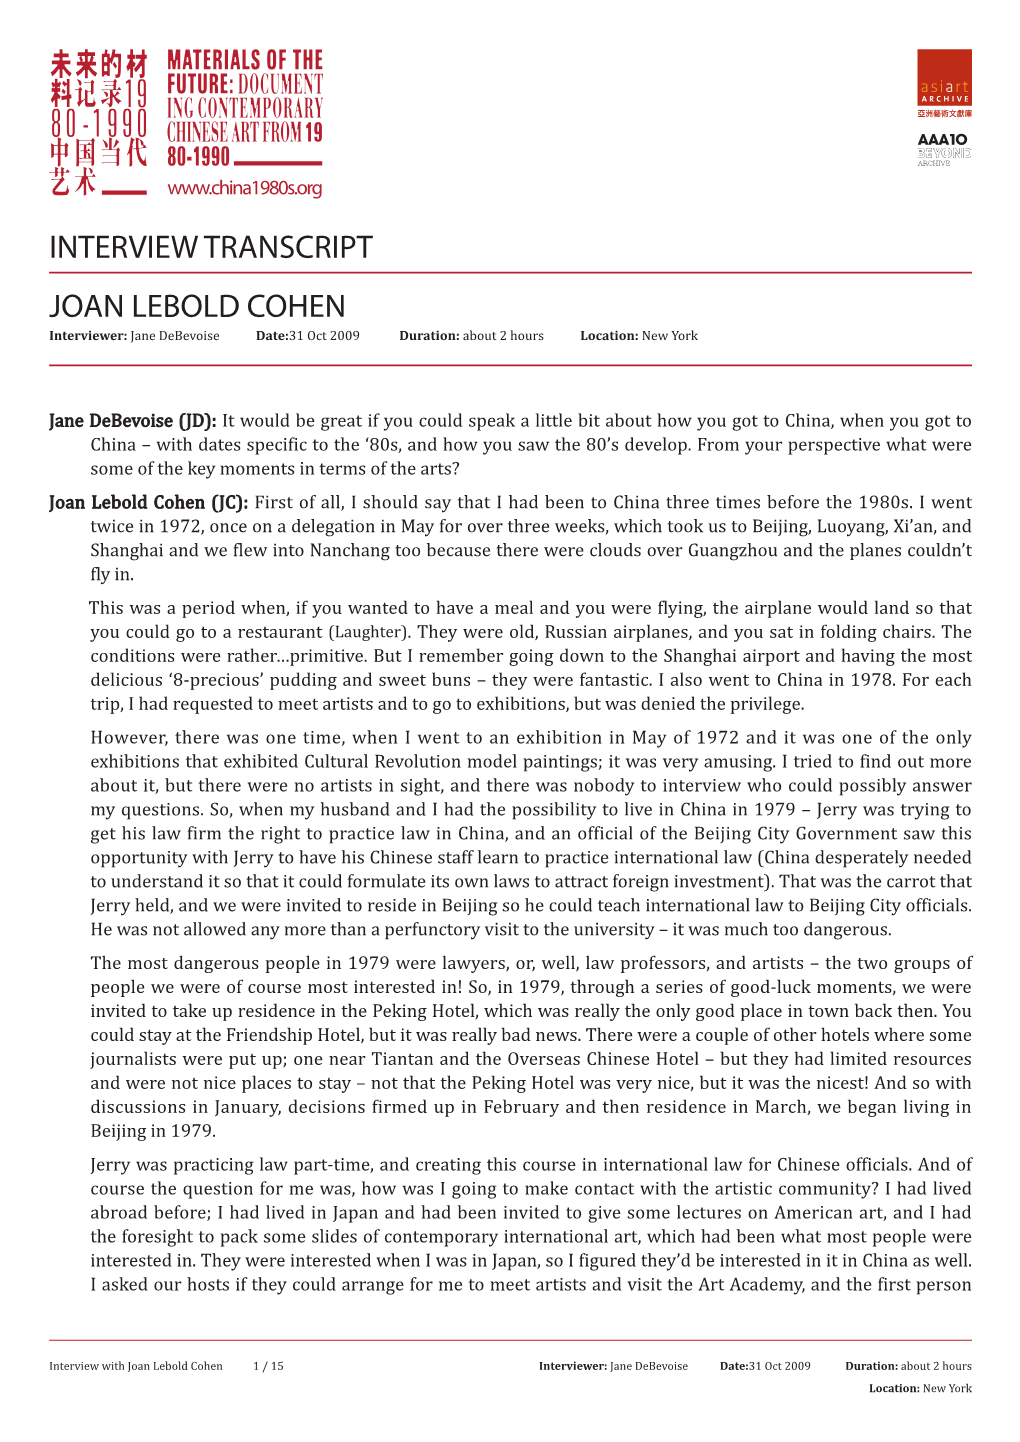 Joan Lebold Cohen Interview Transcript